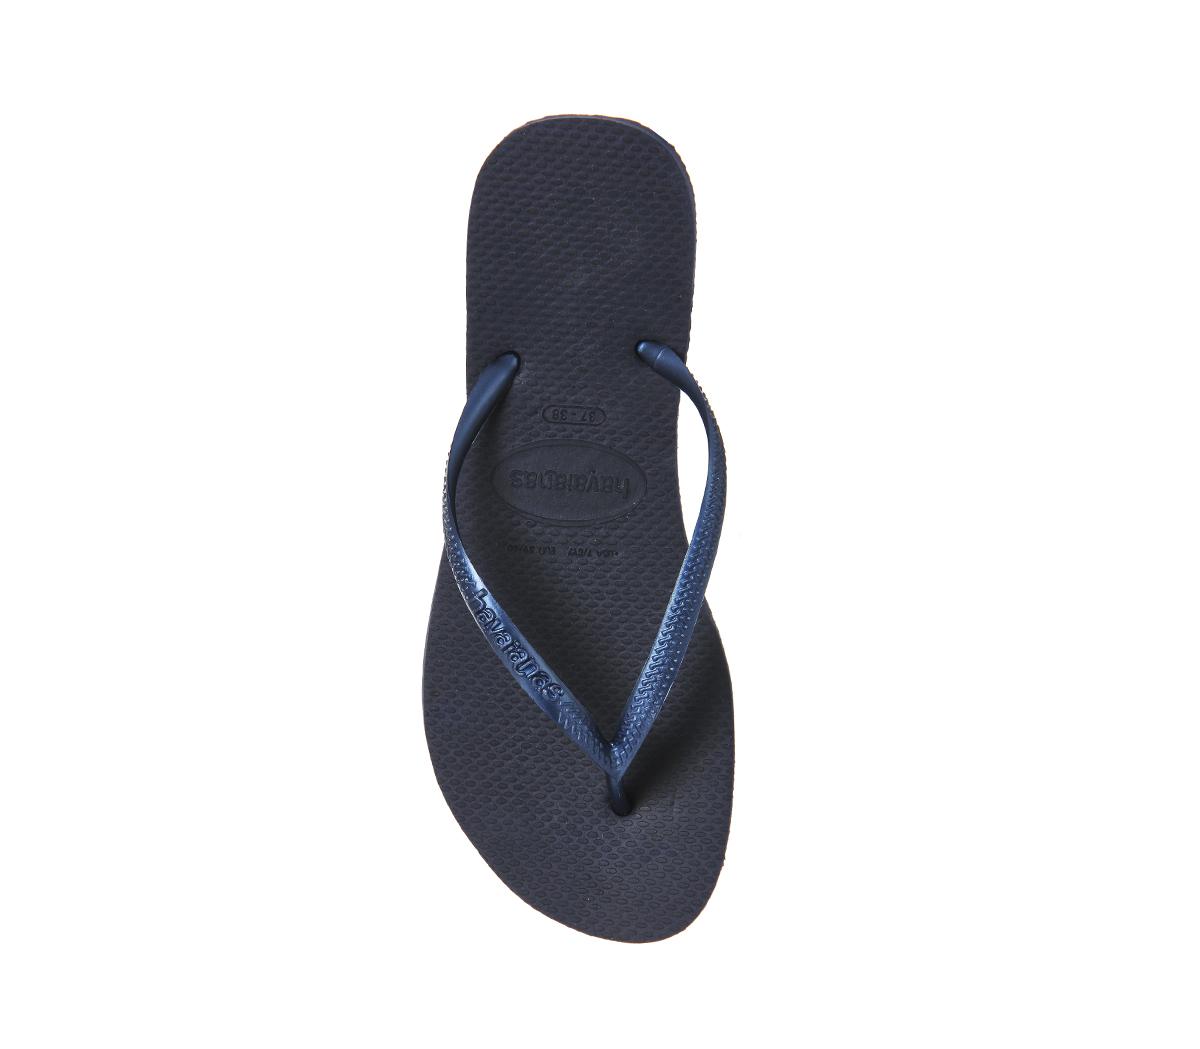 Havaianas Slim Flip Flop Navy Rubber - Women’s Sandals